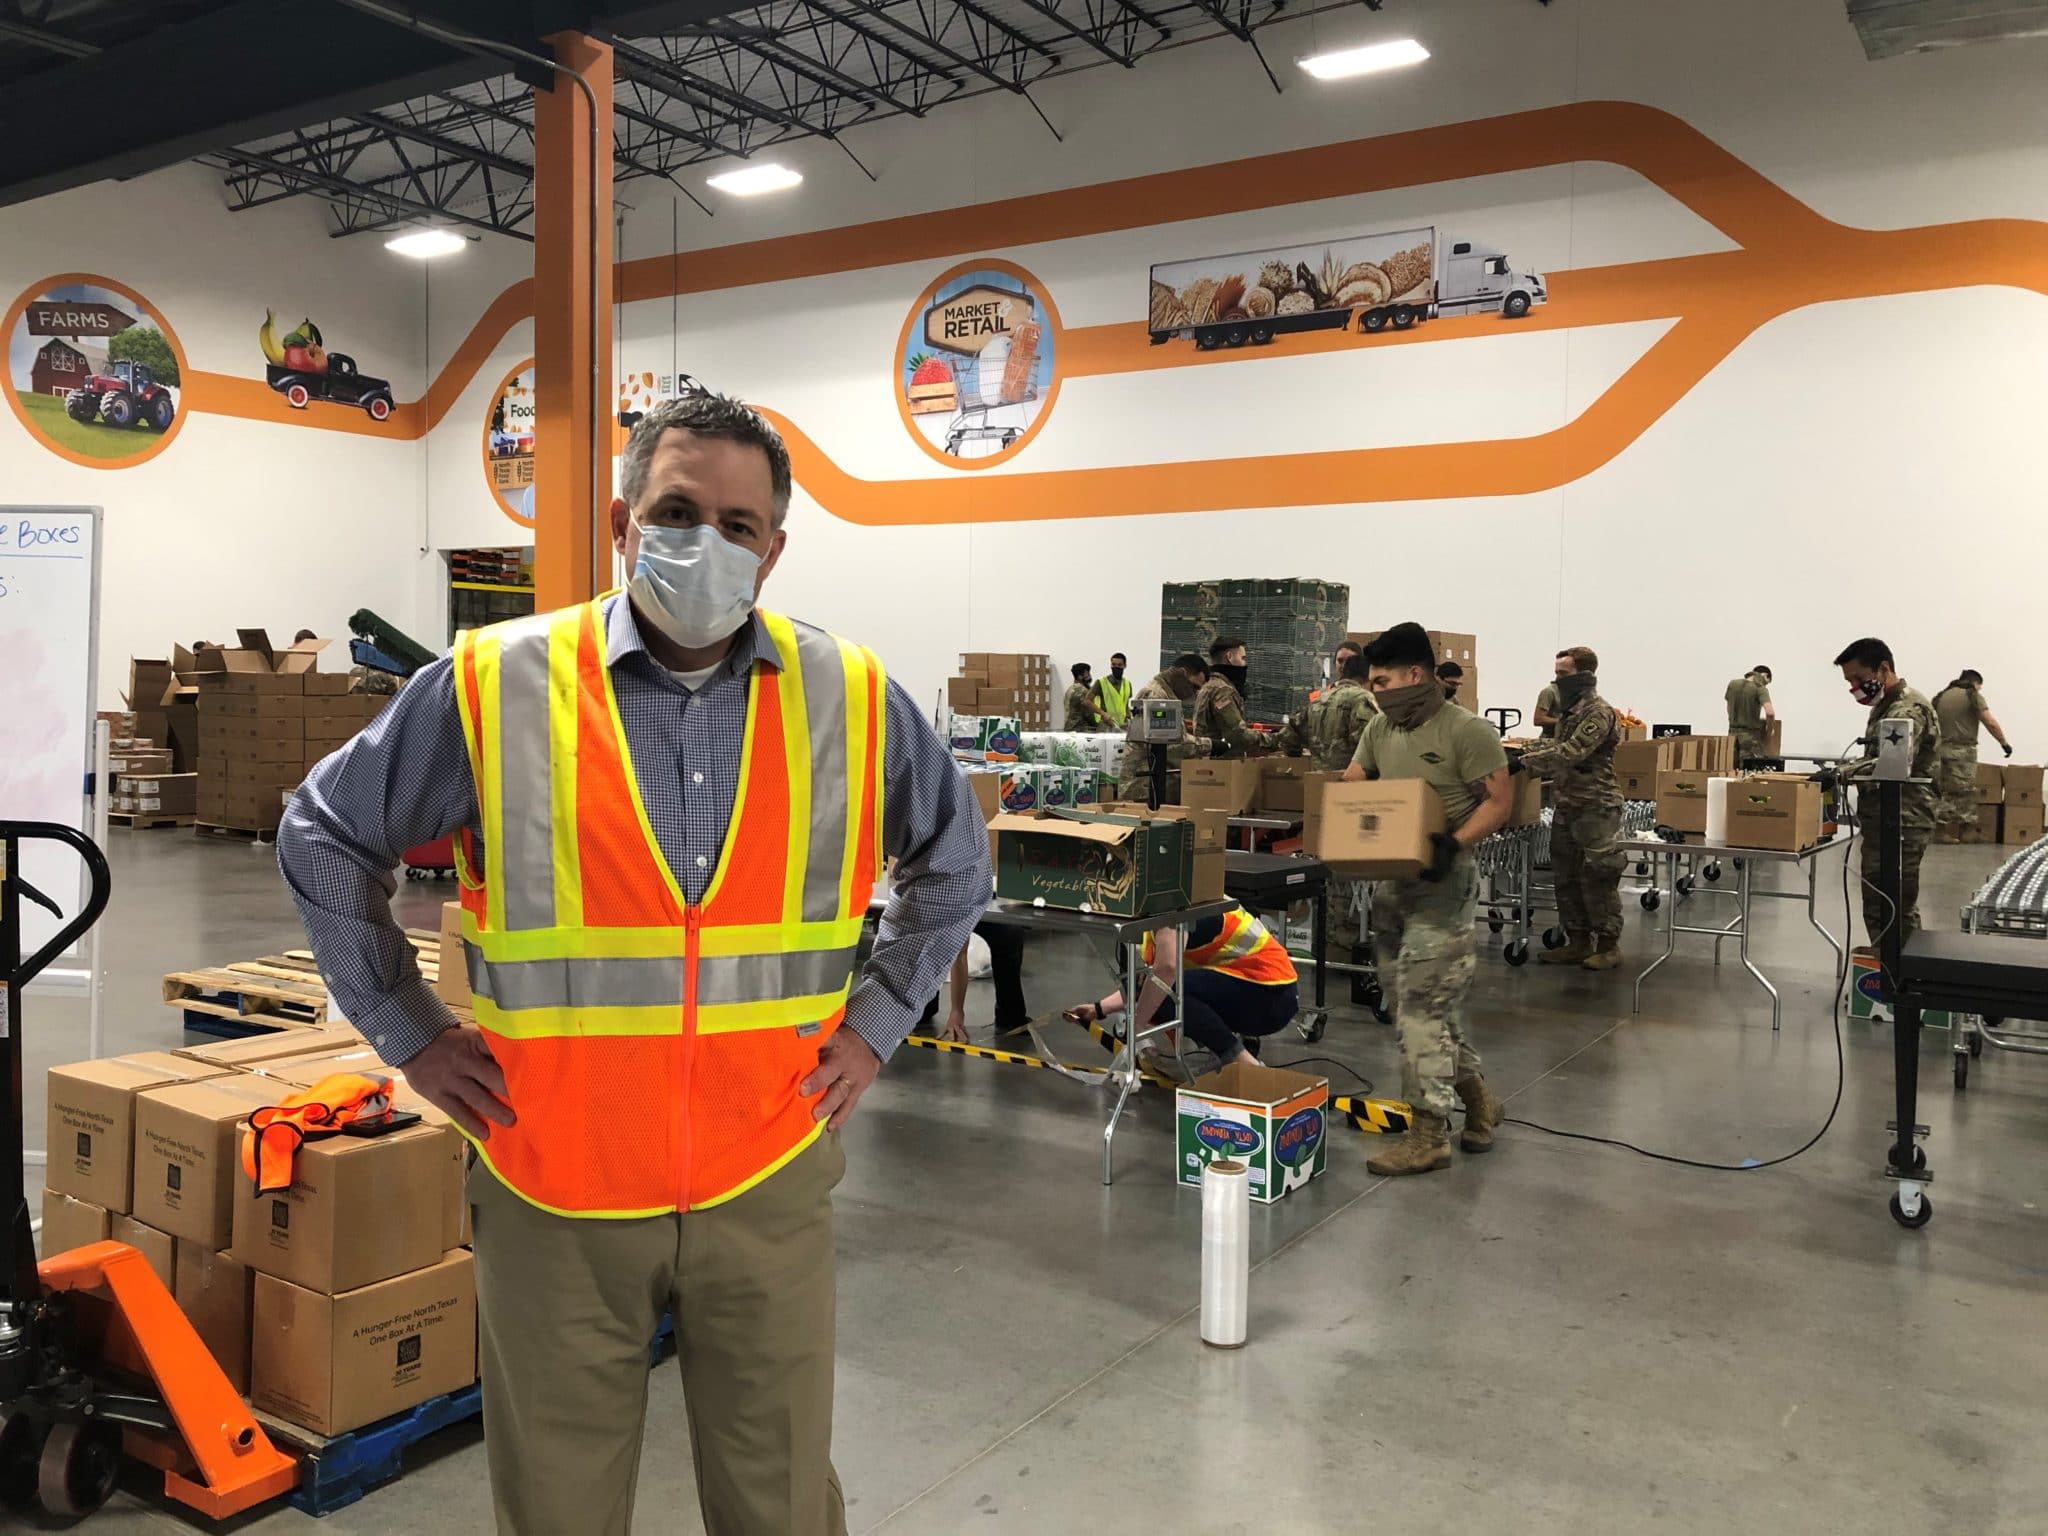 Brad Stewart in an orange safety vest on the volunteer floor of teh North Texas Food Bank